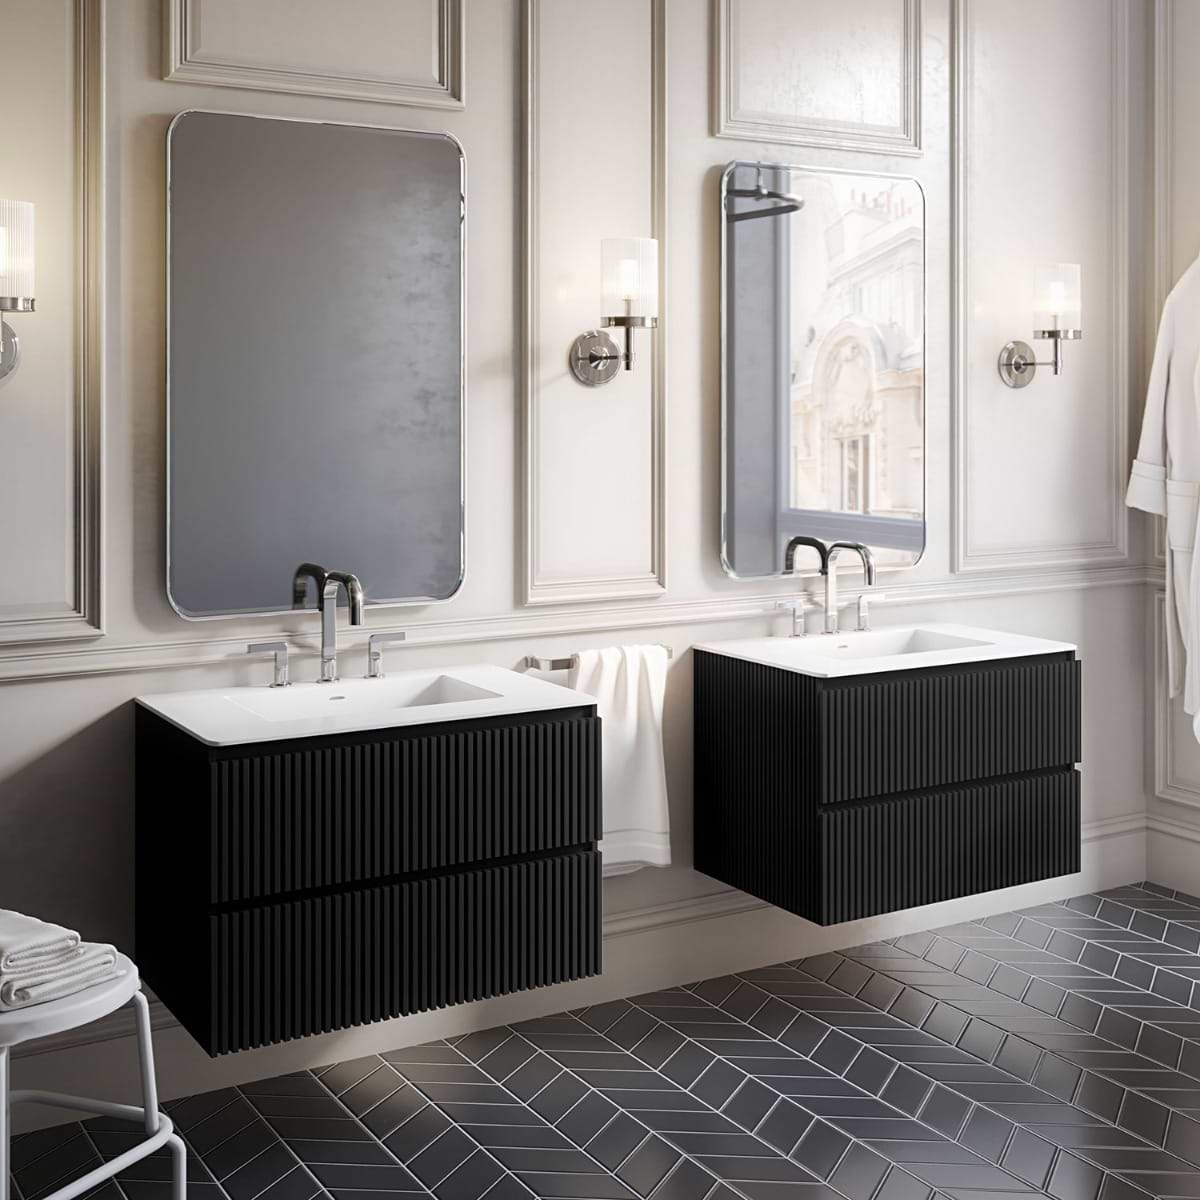 Black and White Bathroom Designs That Inspire - Tileist by Tilebar